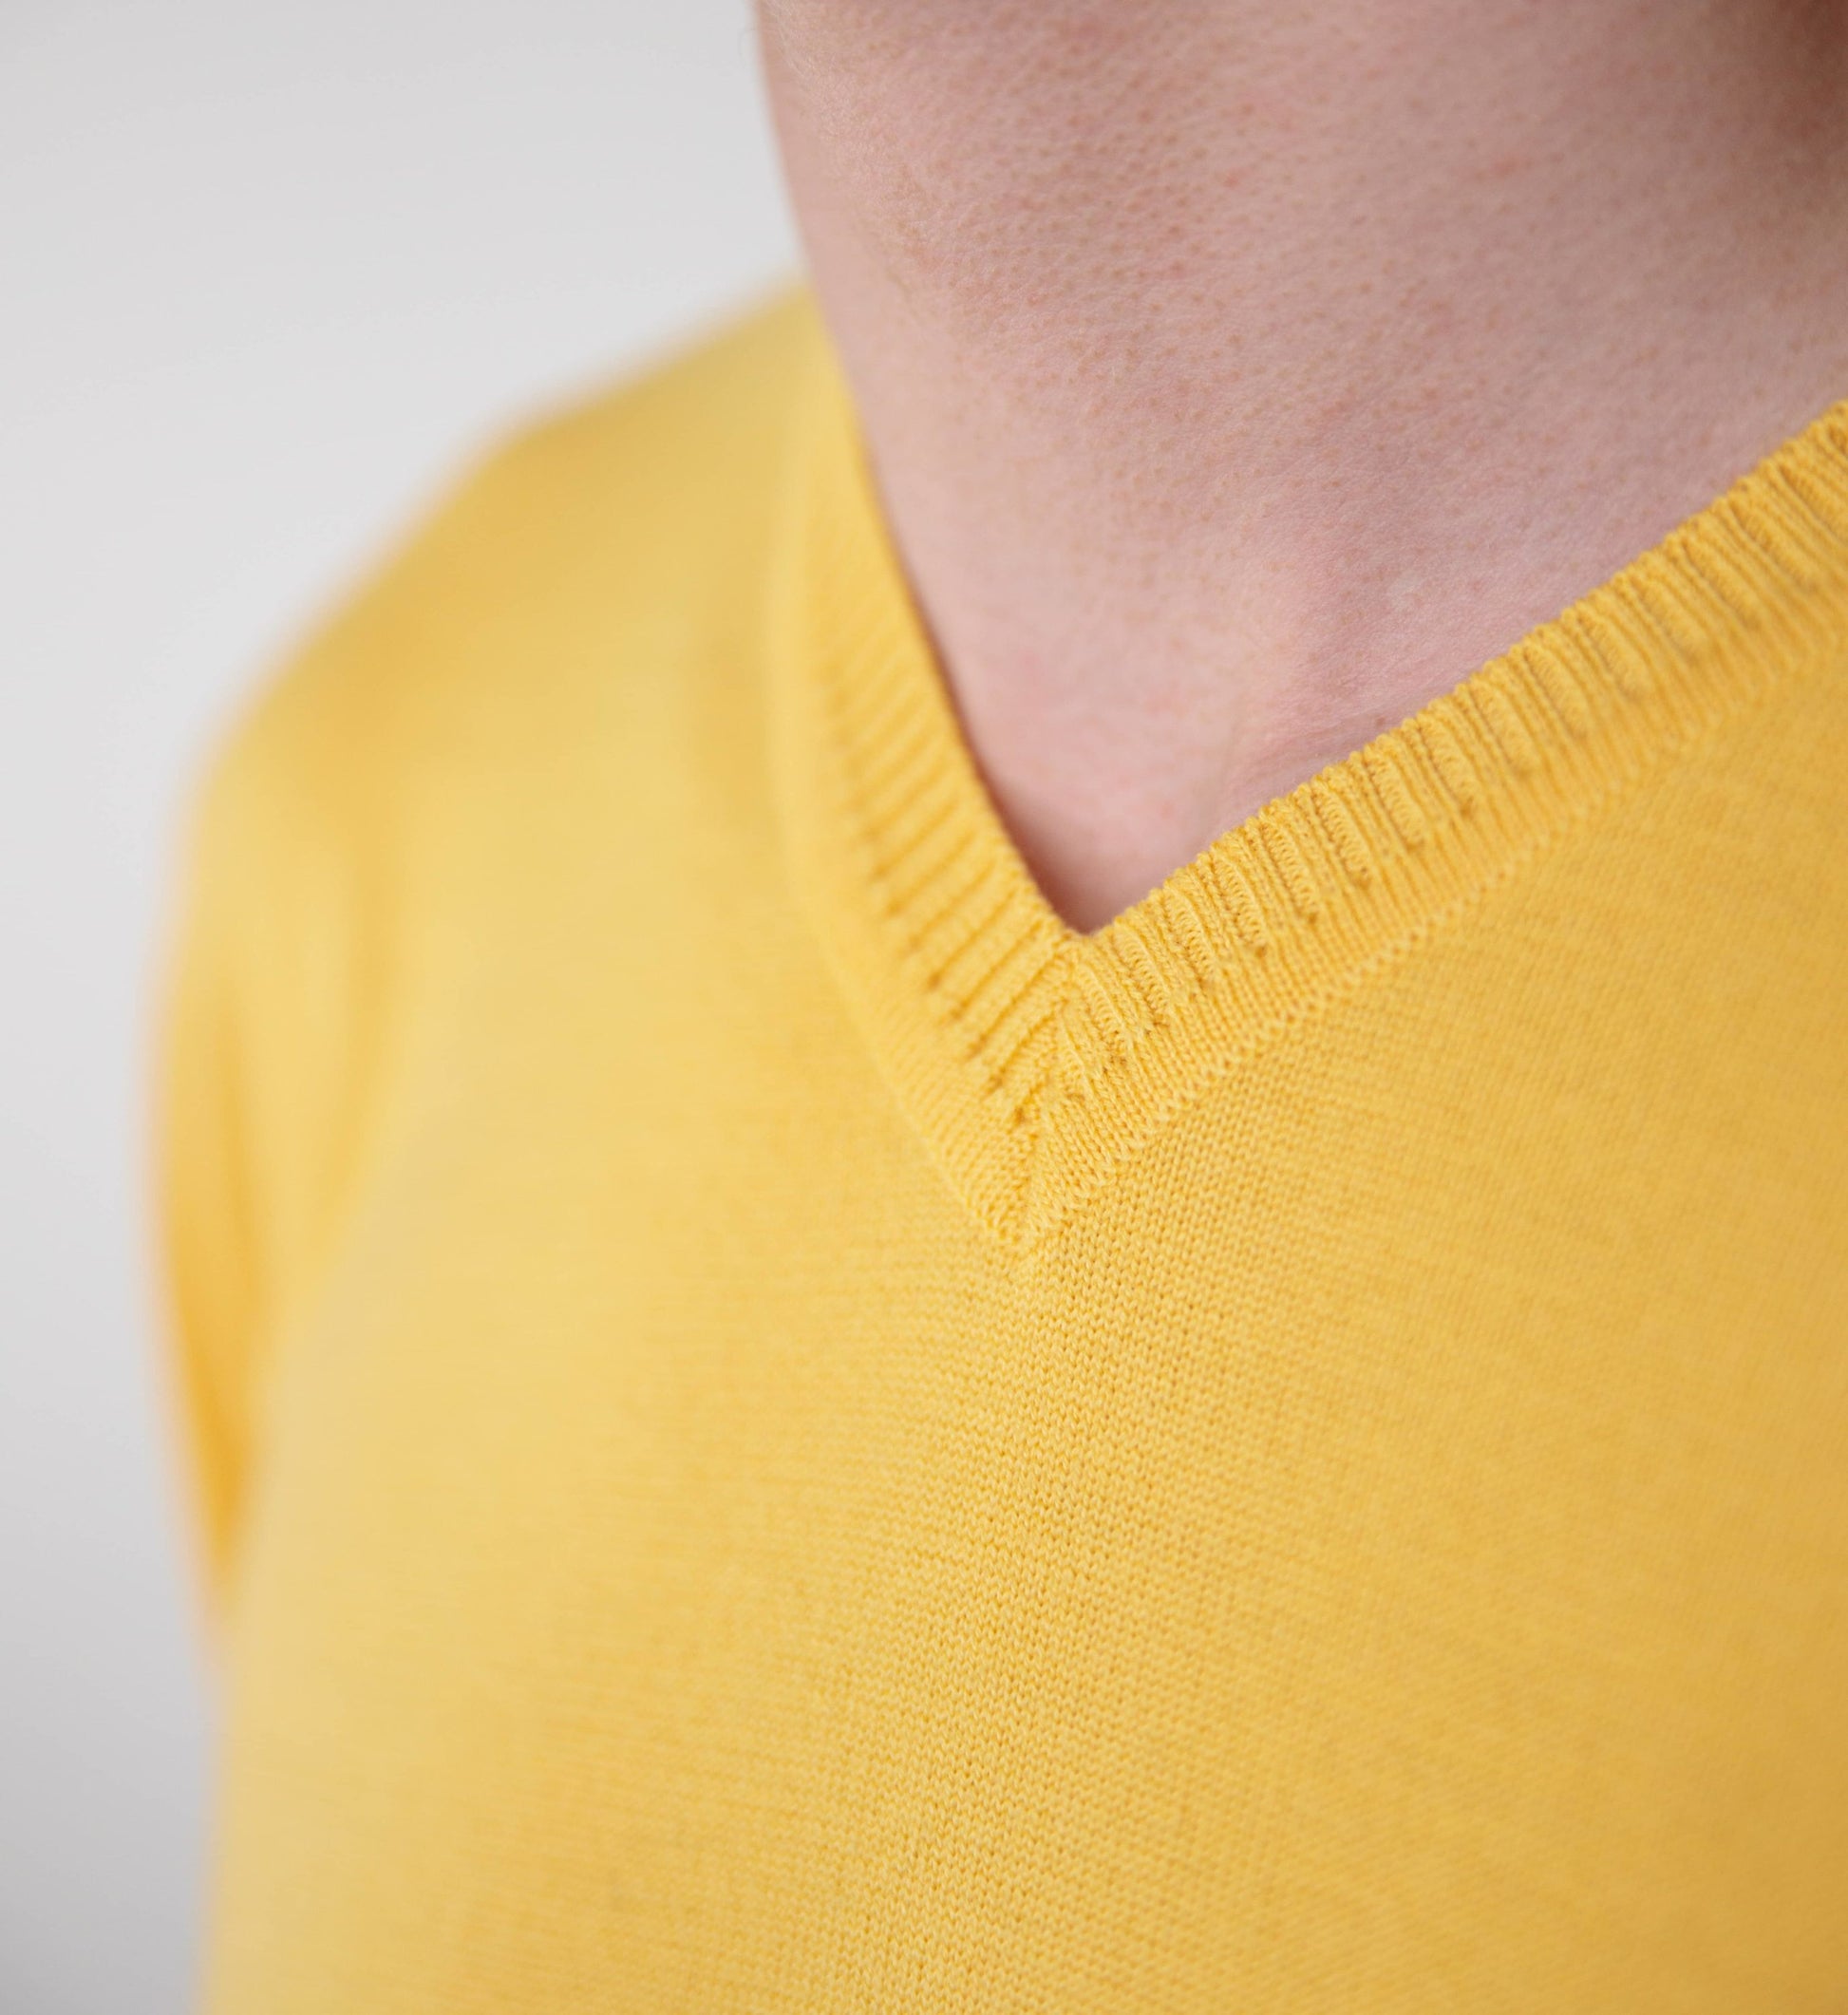 Thin plain v-neck sweater